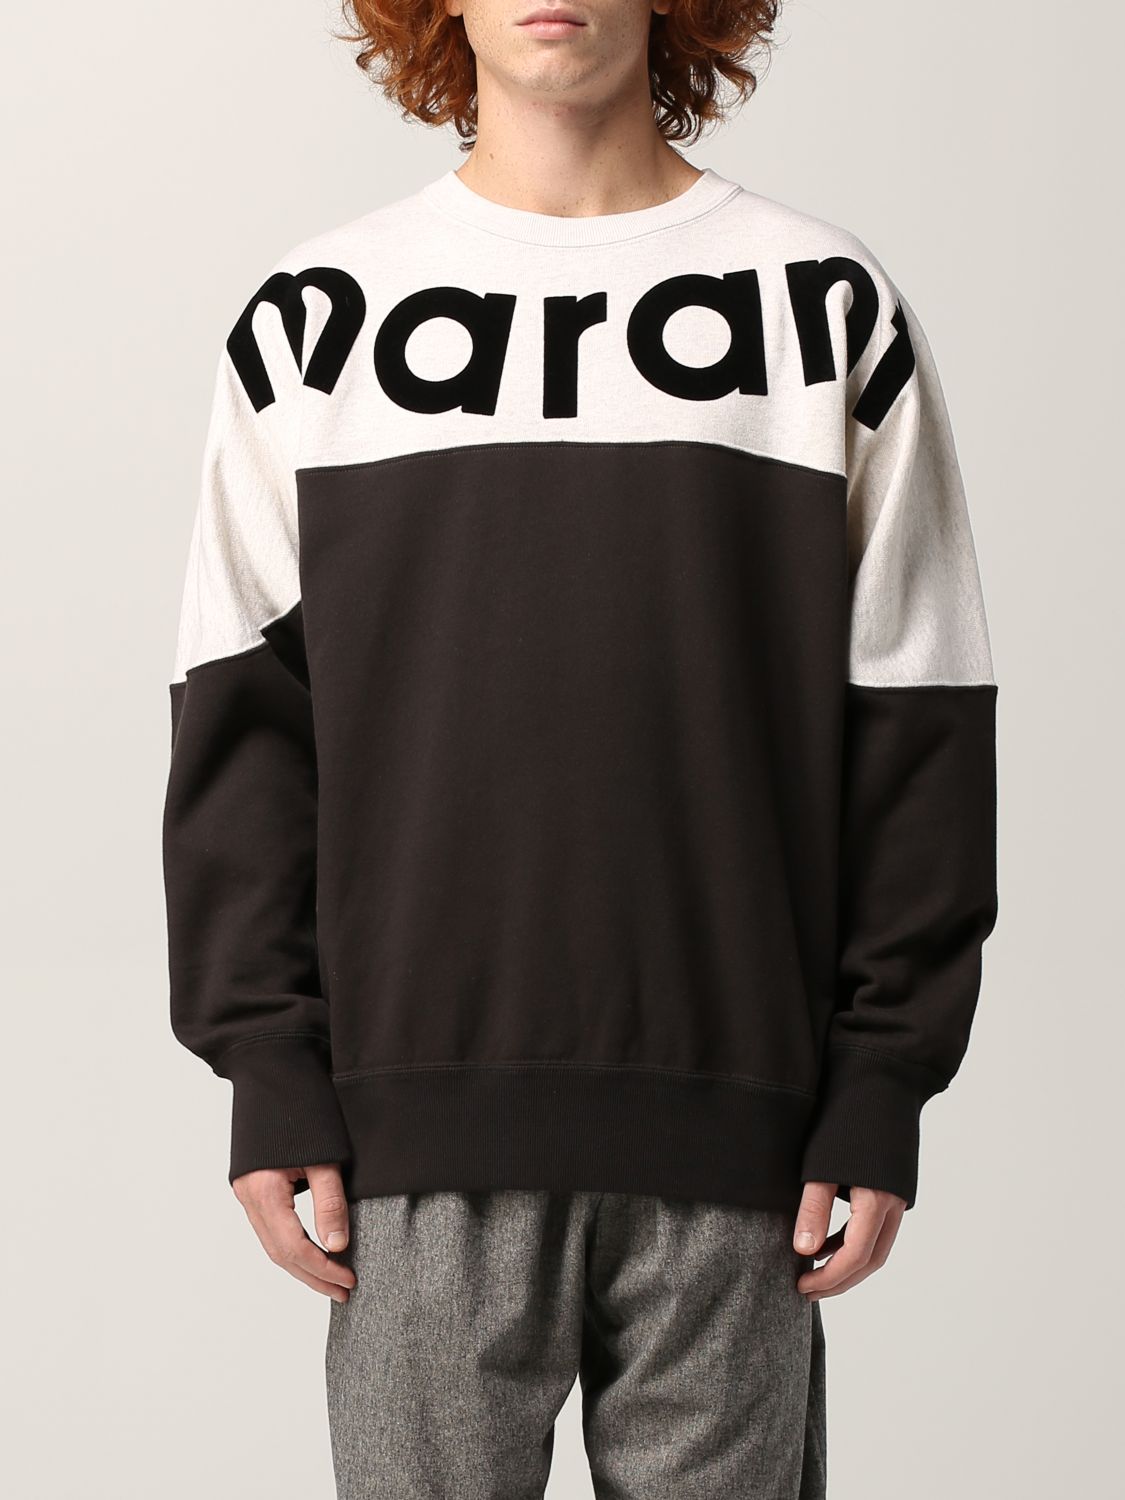 ISABEL MARANT ETOILE: cotton blend sweatshirt with maxi logo | Sweatshirt Isabel Marant Etoile Men | Sweatshirt Isabel Marant Etoile SW025900M006H GIGLIO.COM